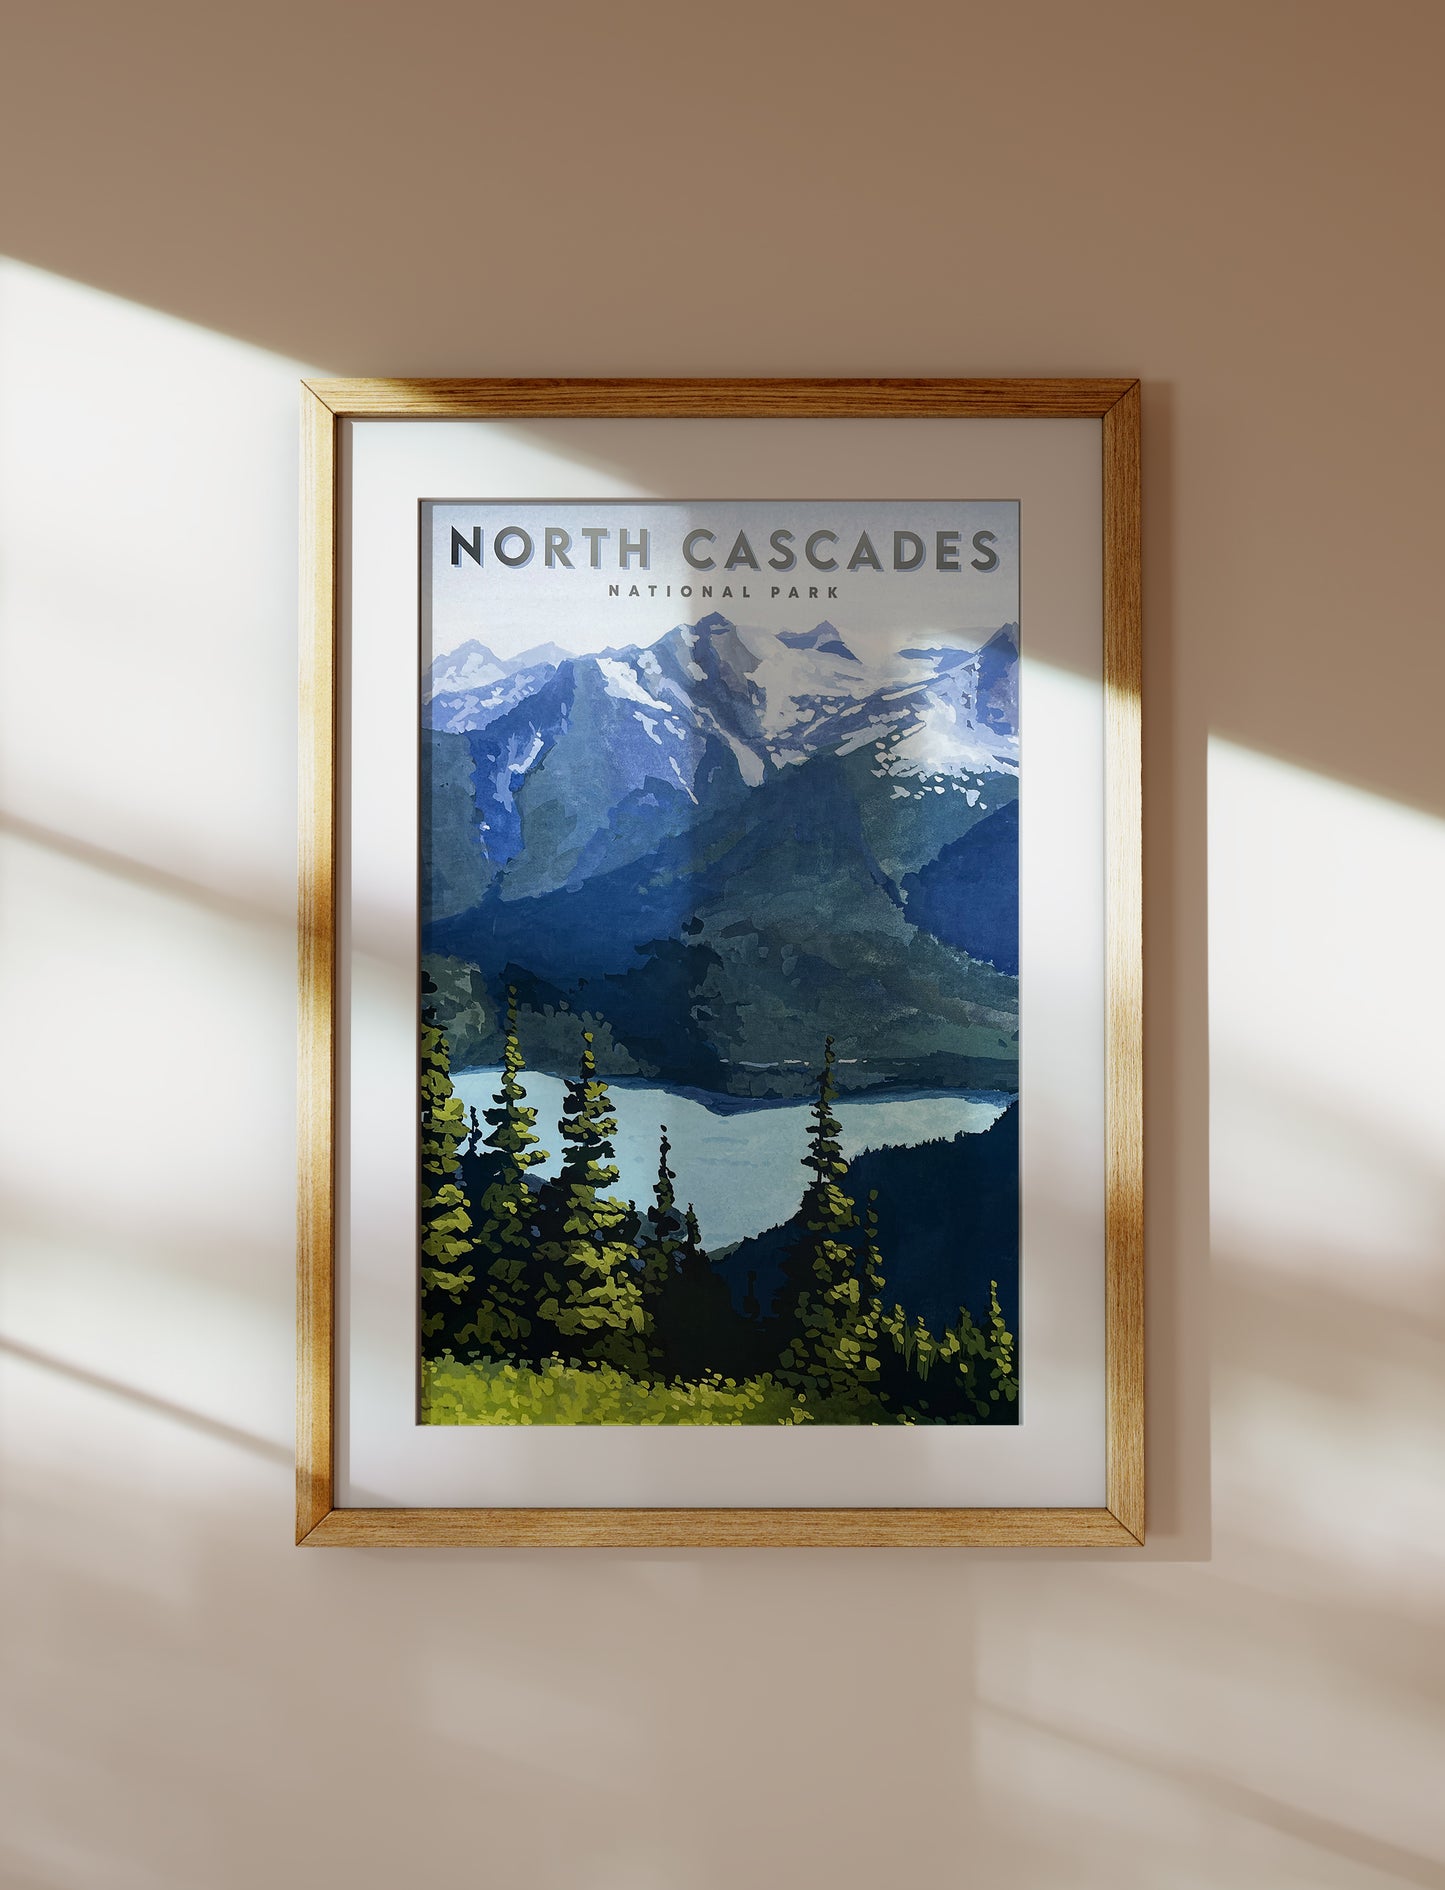 'North Cascades' National Park Travel Poster